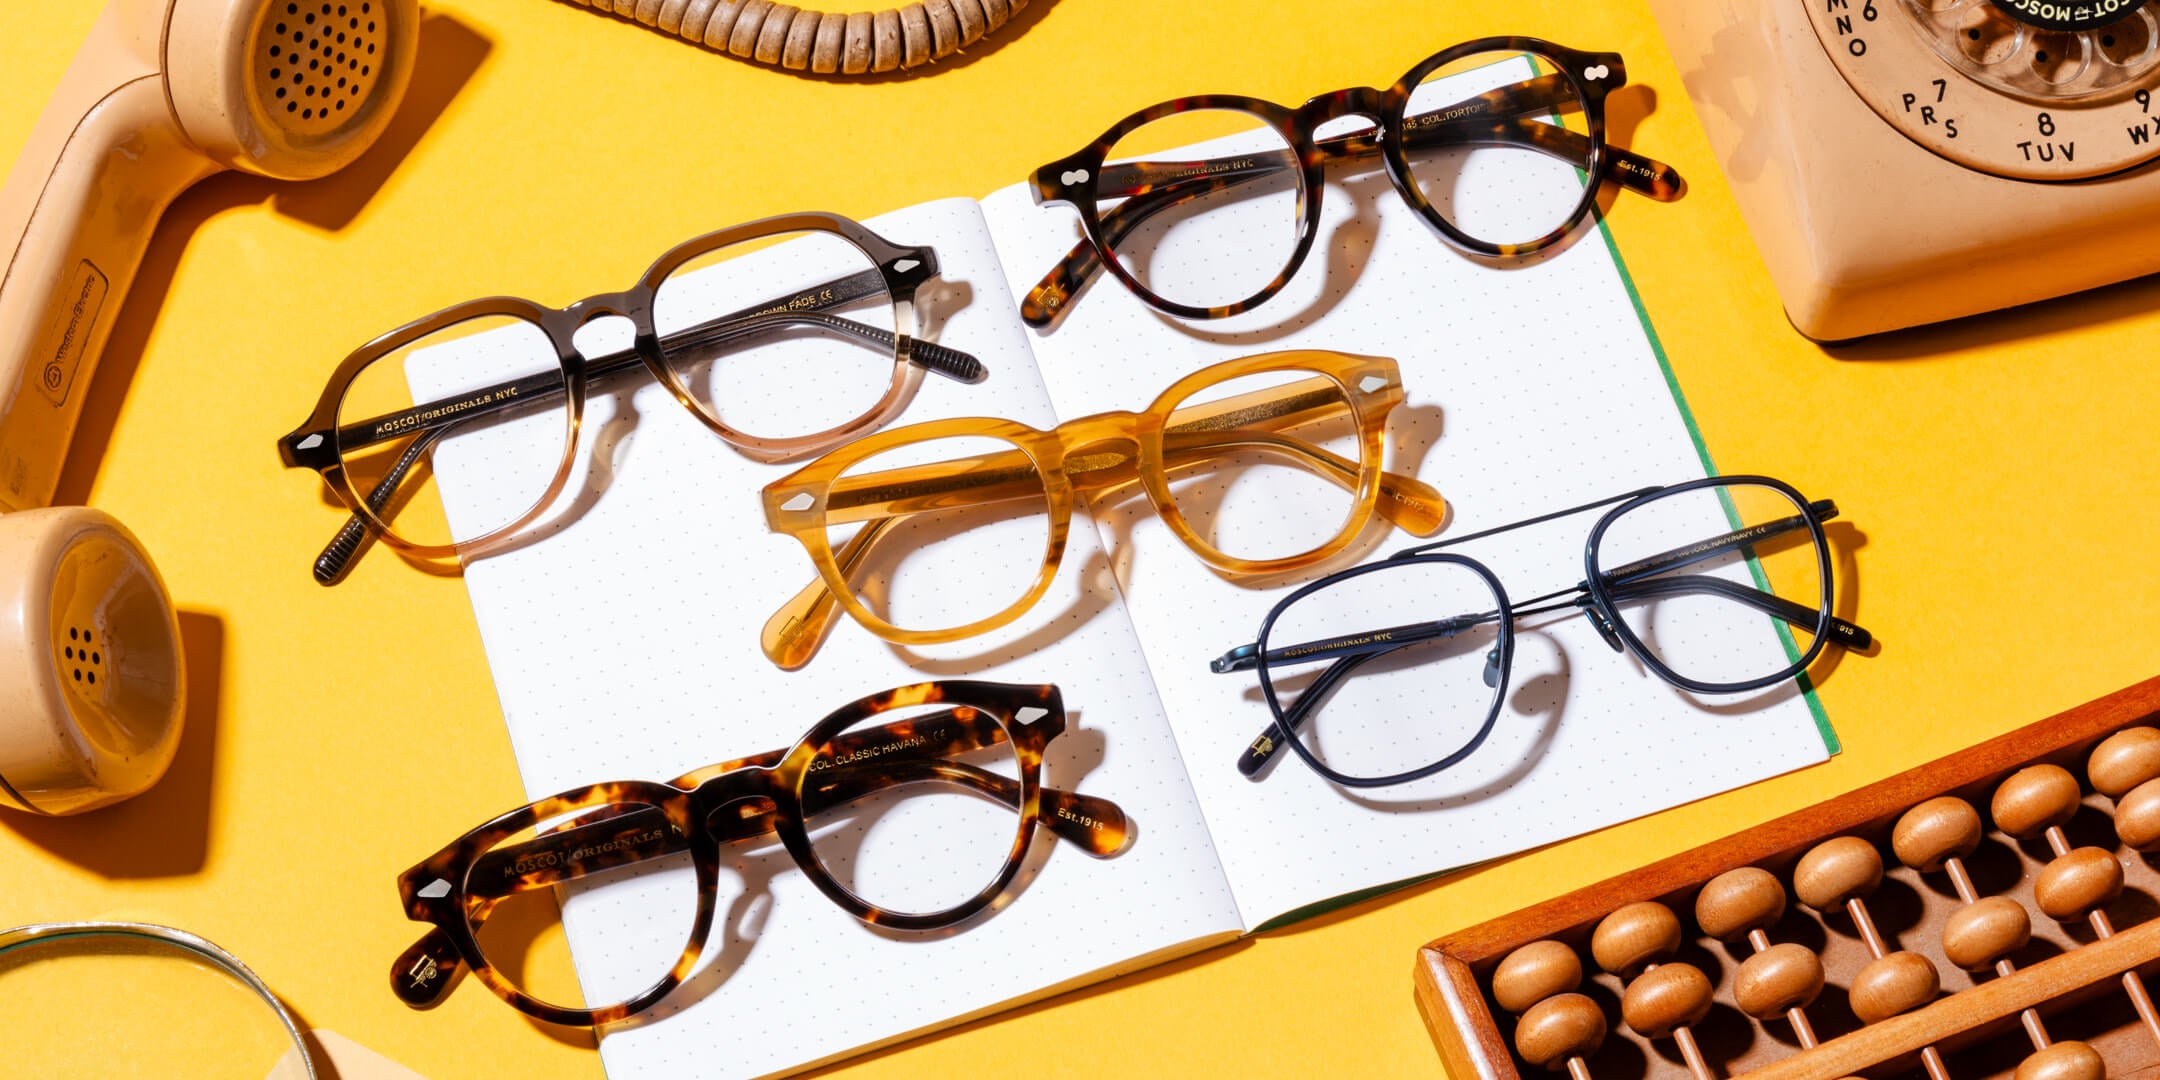 Shop our favorite optical frames!